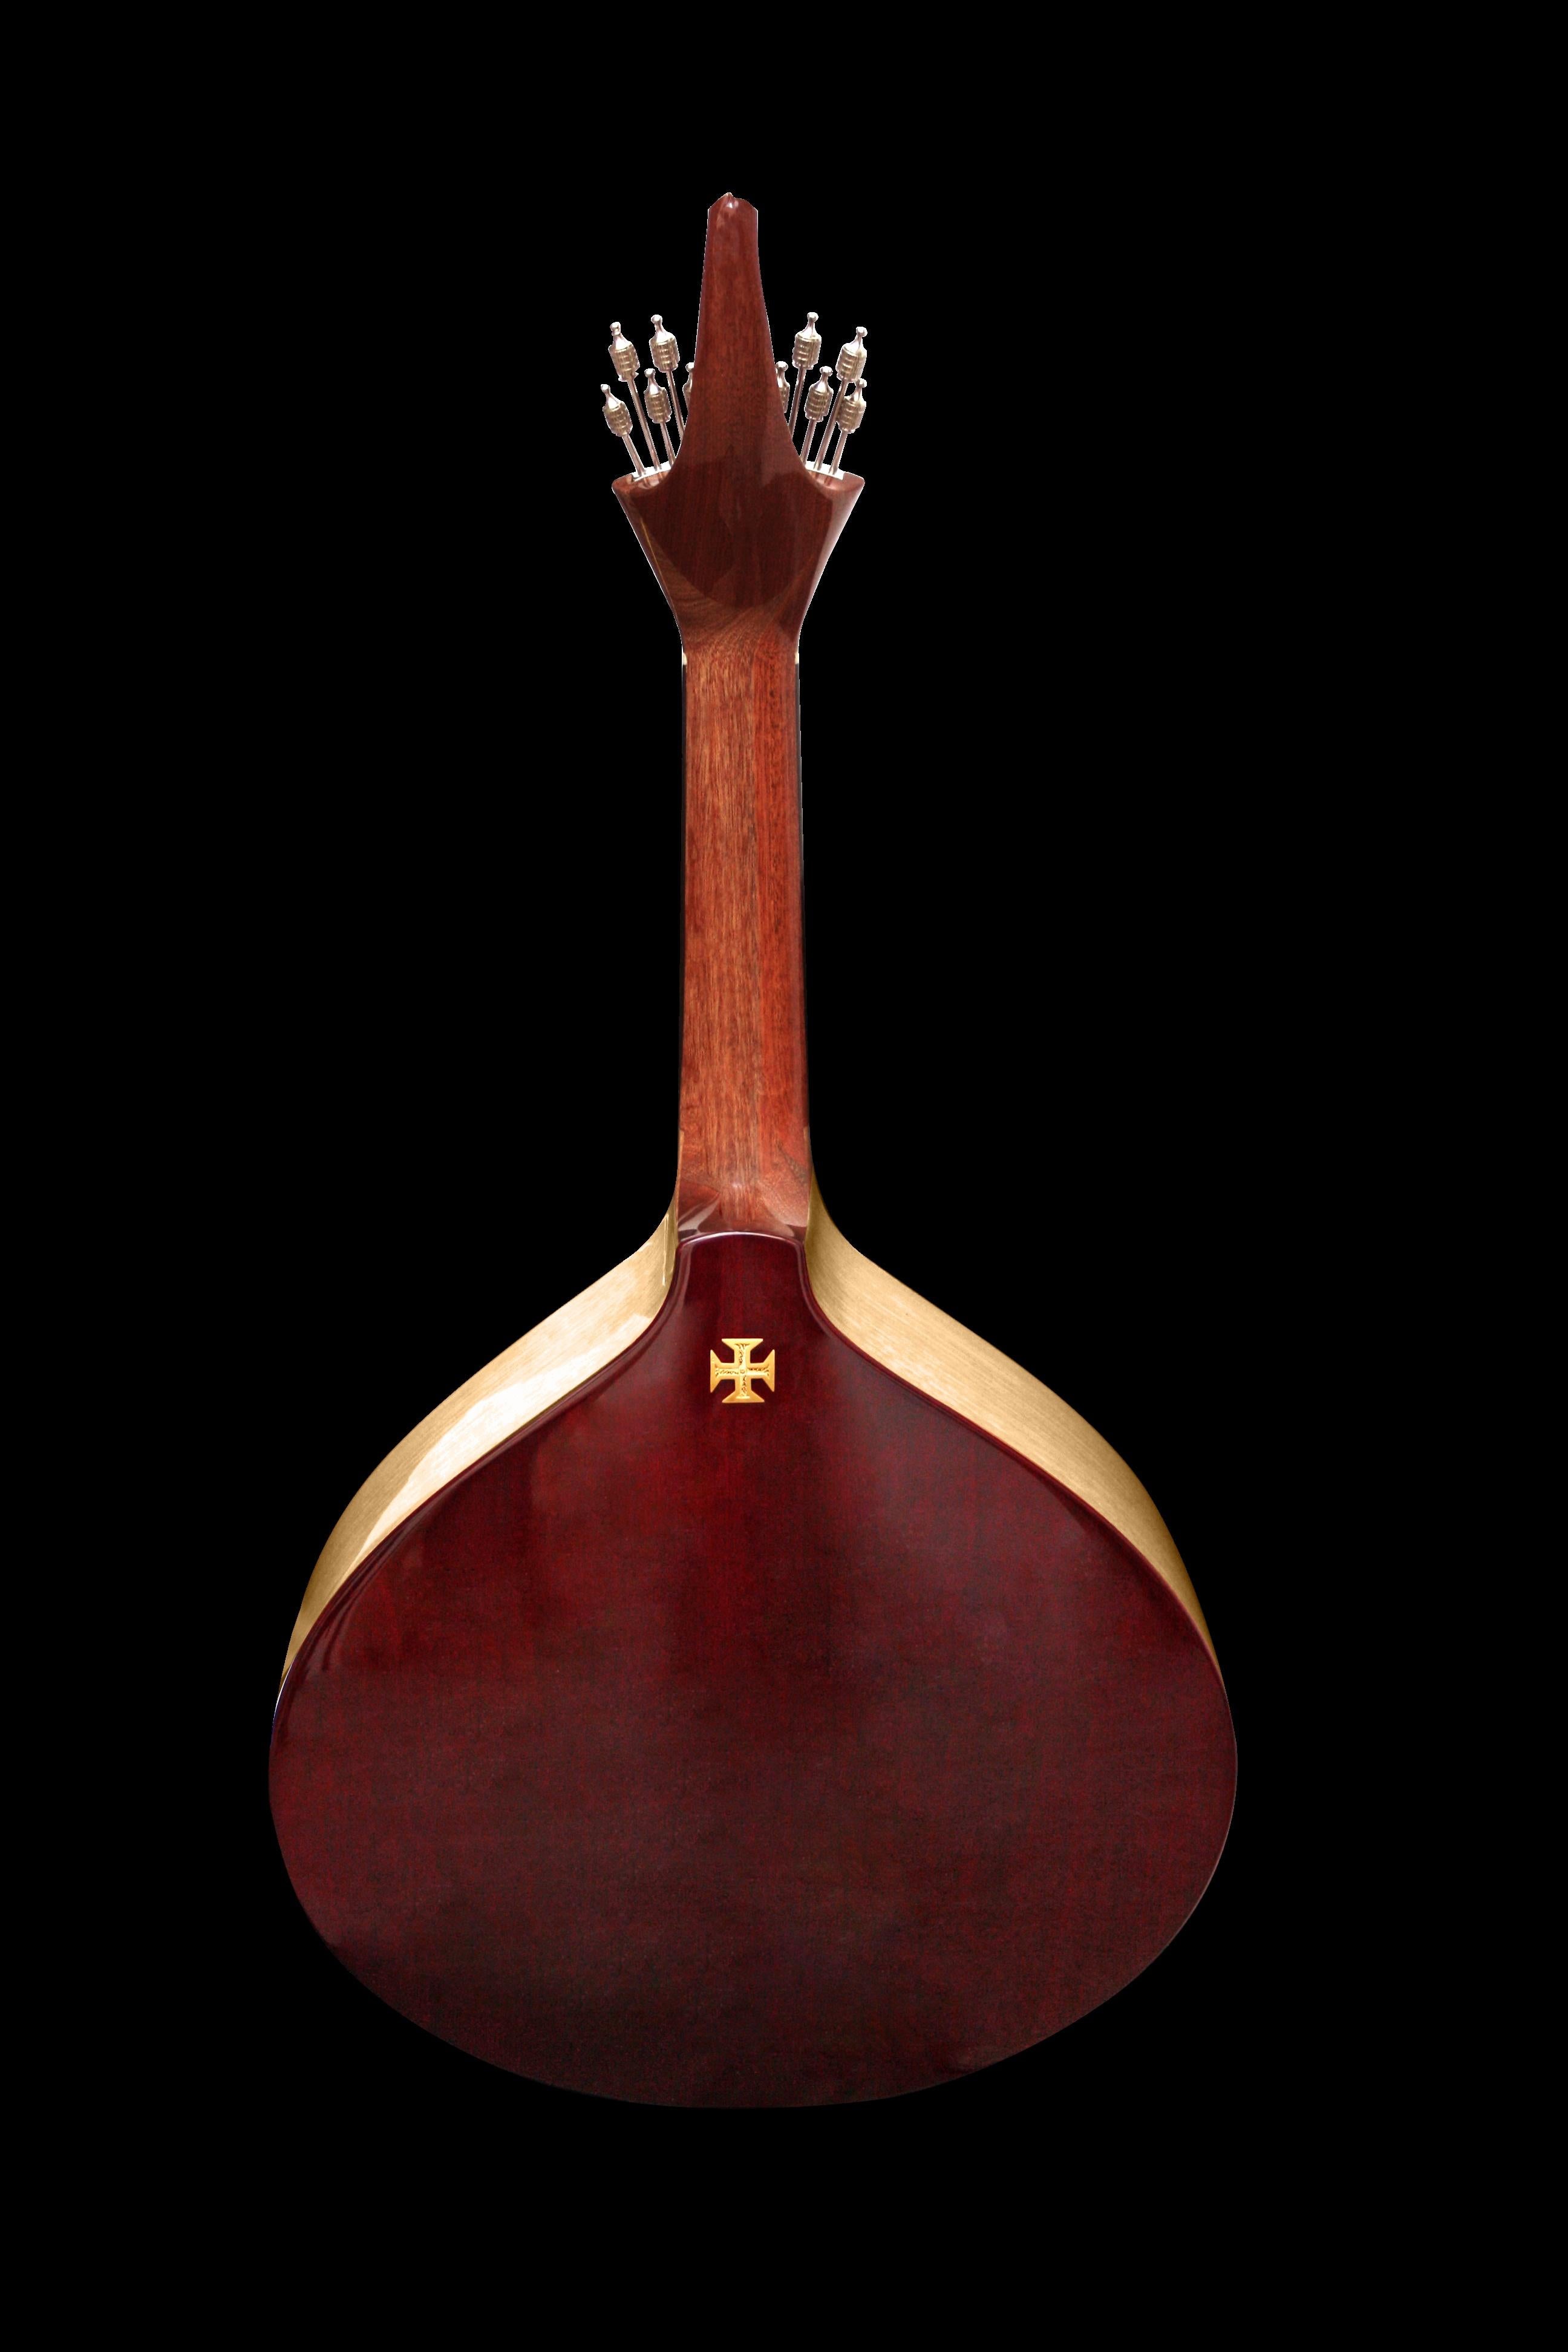 Contemporary 21st Century Handmade and Painted Adamastor Portuguese Guitar